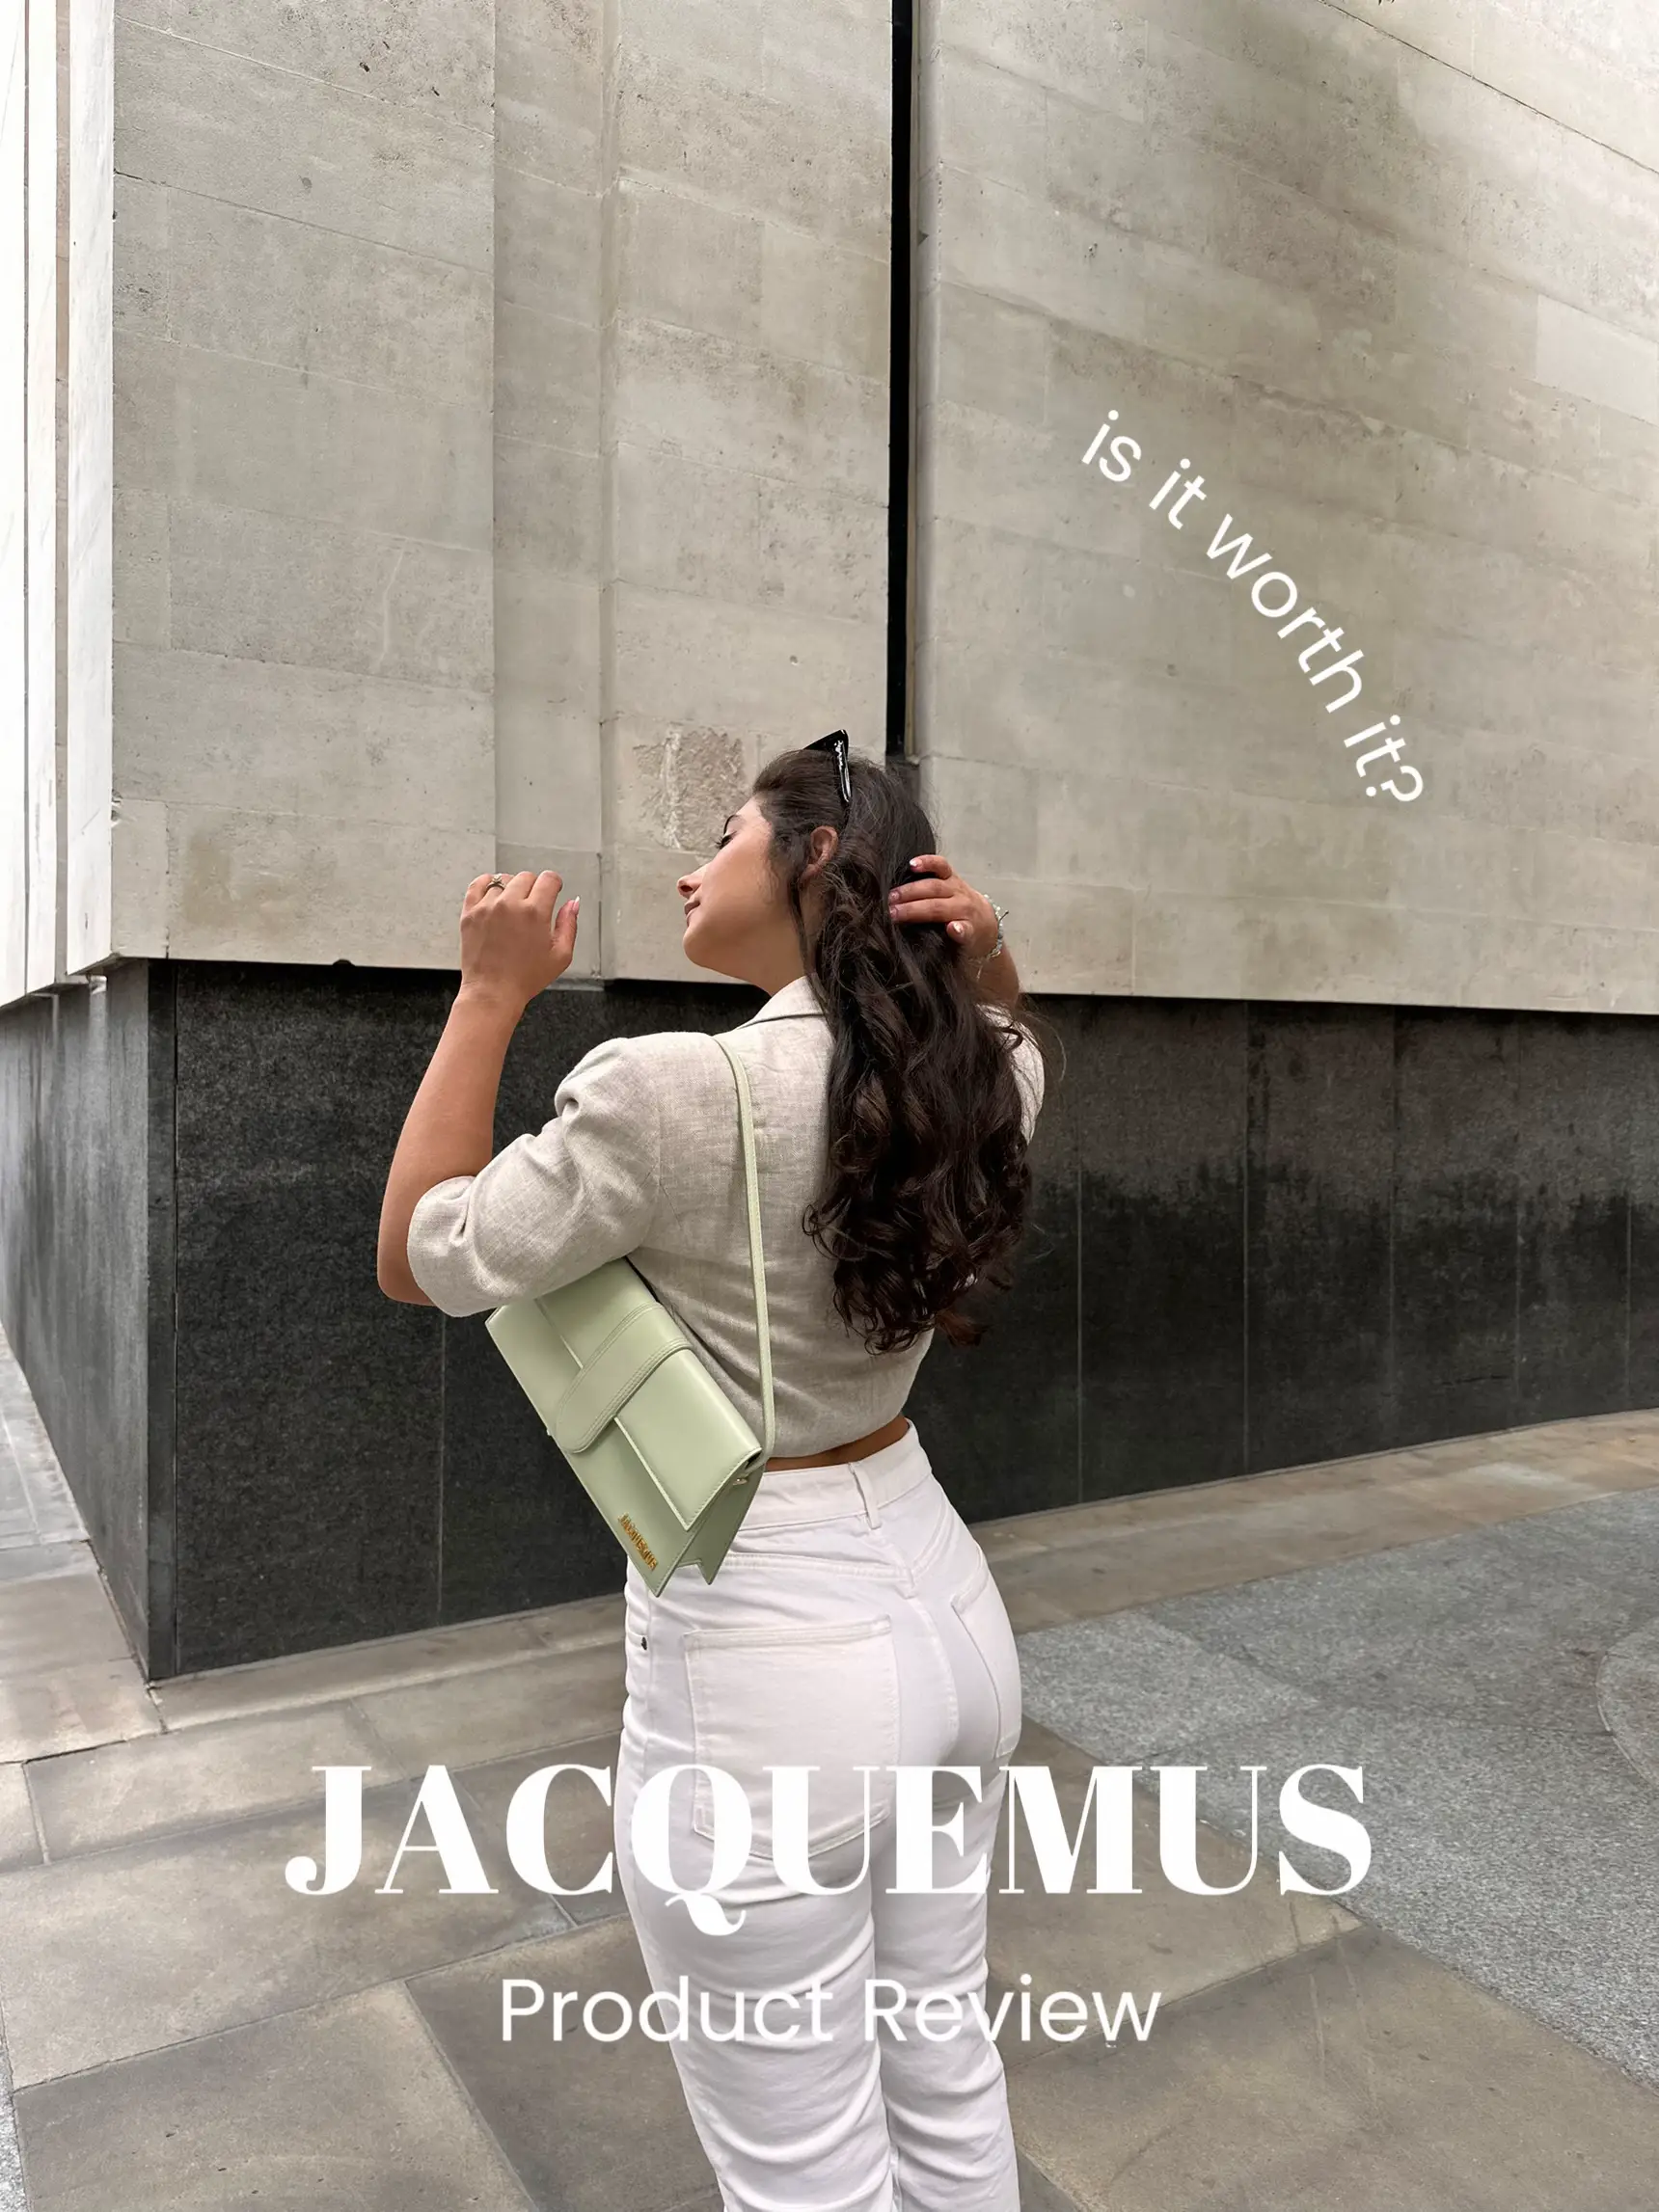 Comparing the jacquemus Le Grand Bambino and the Le Bambino bag